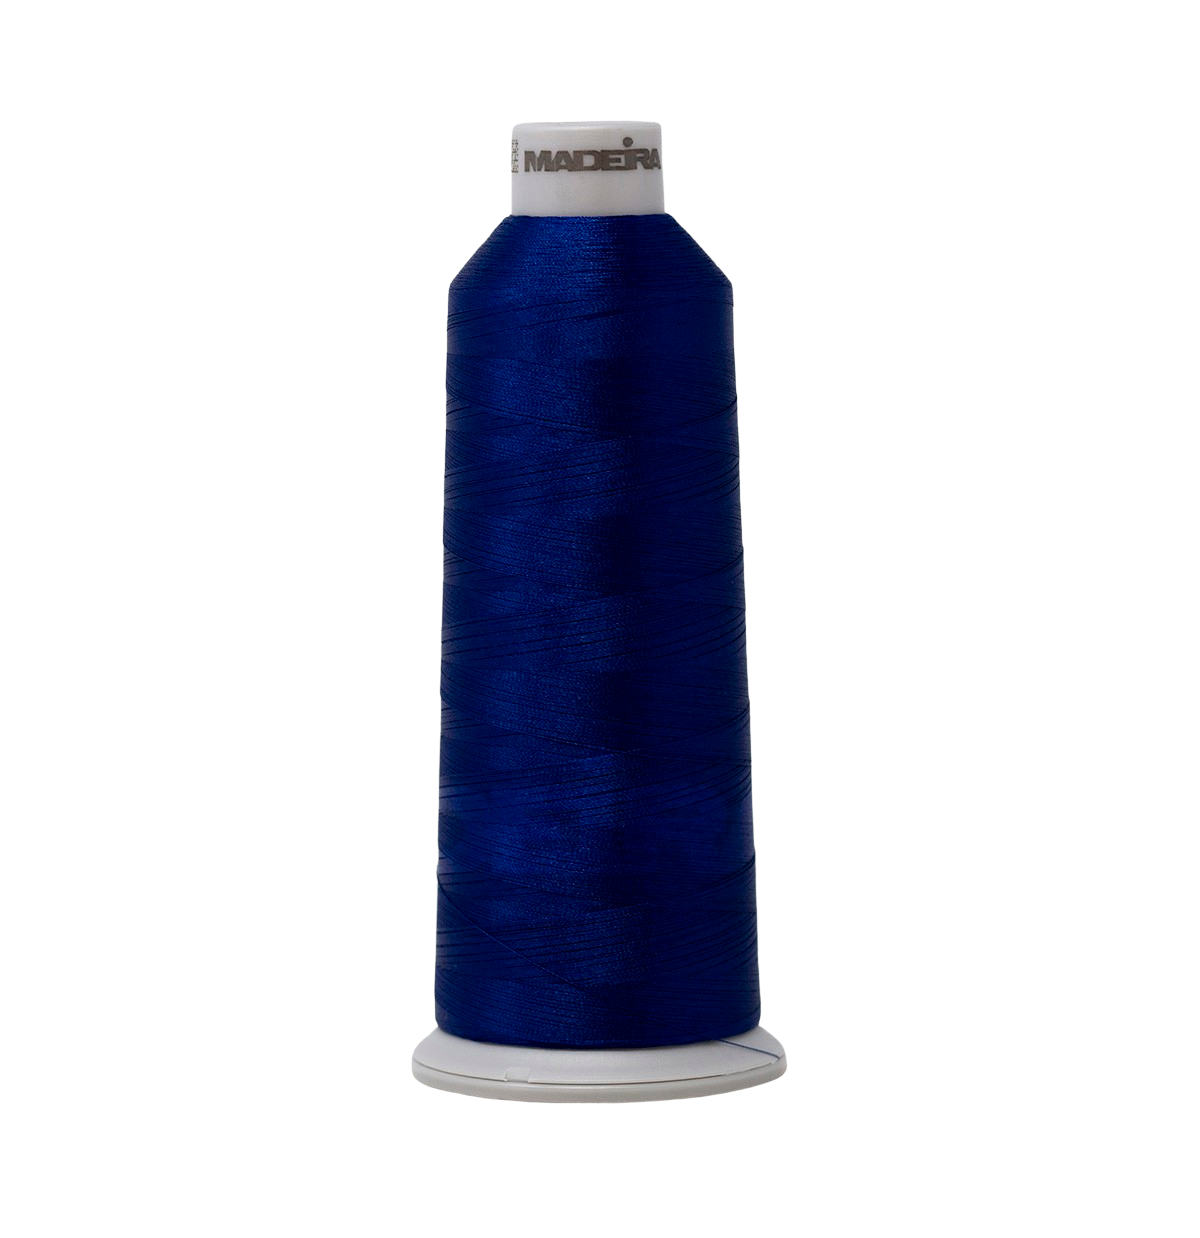 Persian Blue 1843  #40 Weight Madeira Polyneon Thread